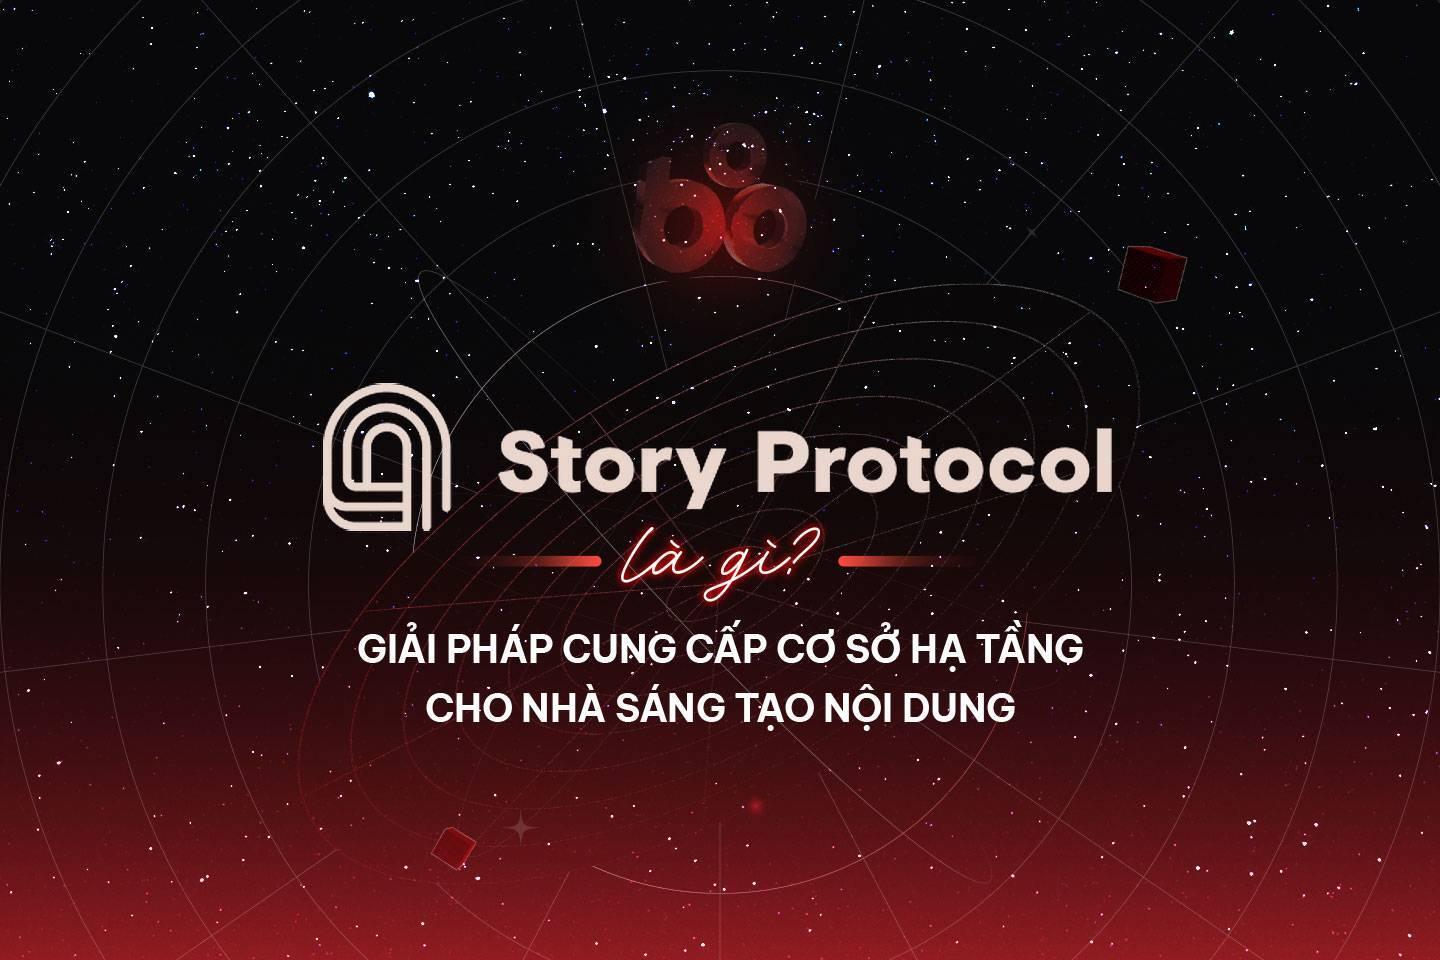 story-protocol-la-gi-giai-phap-cung-cap-co-so-ha-tang-cho-nha-sang-tao-noi-dung